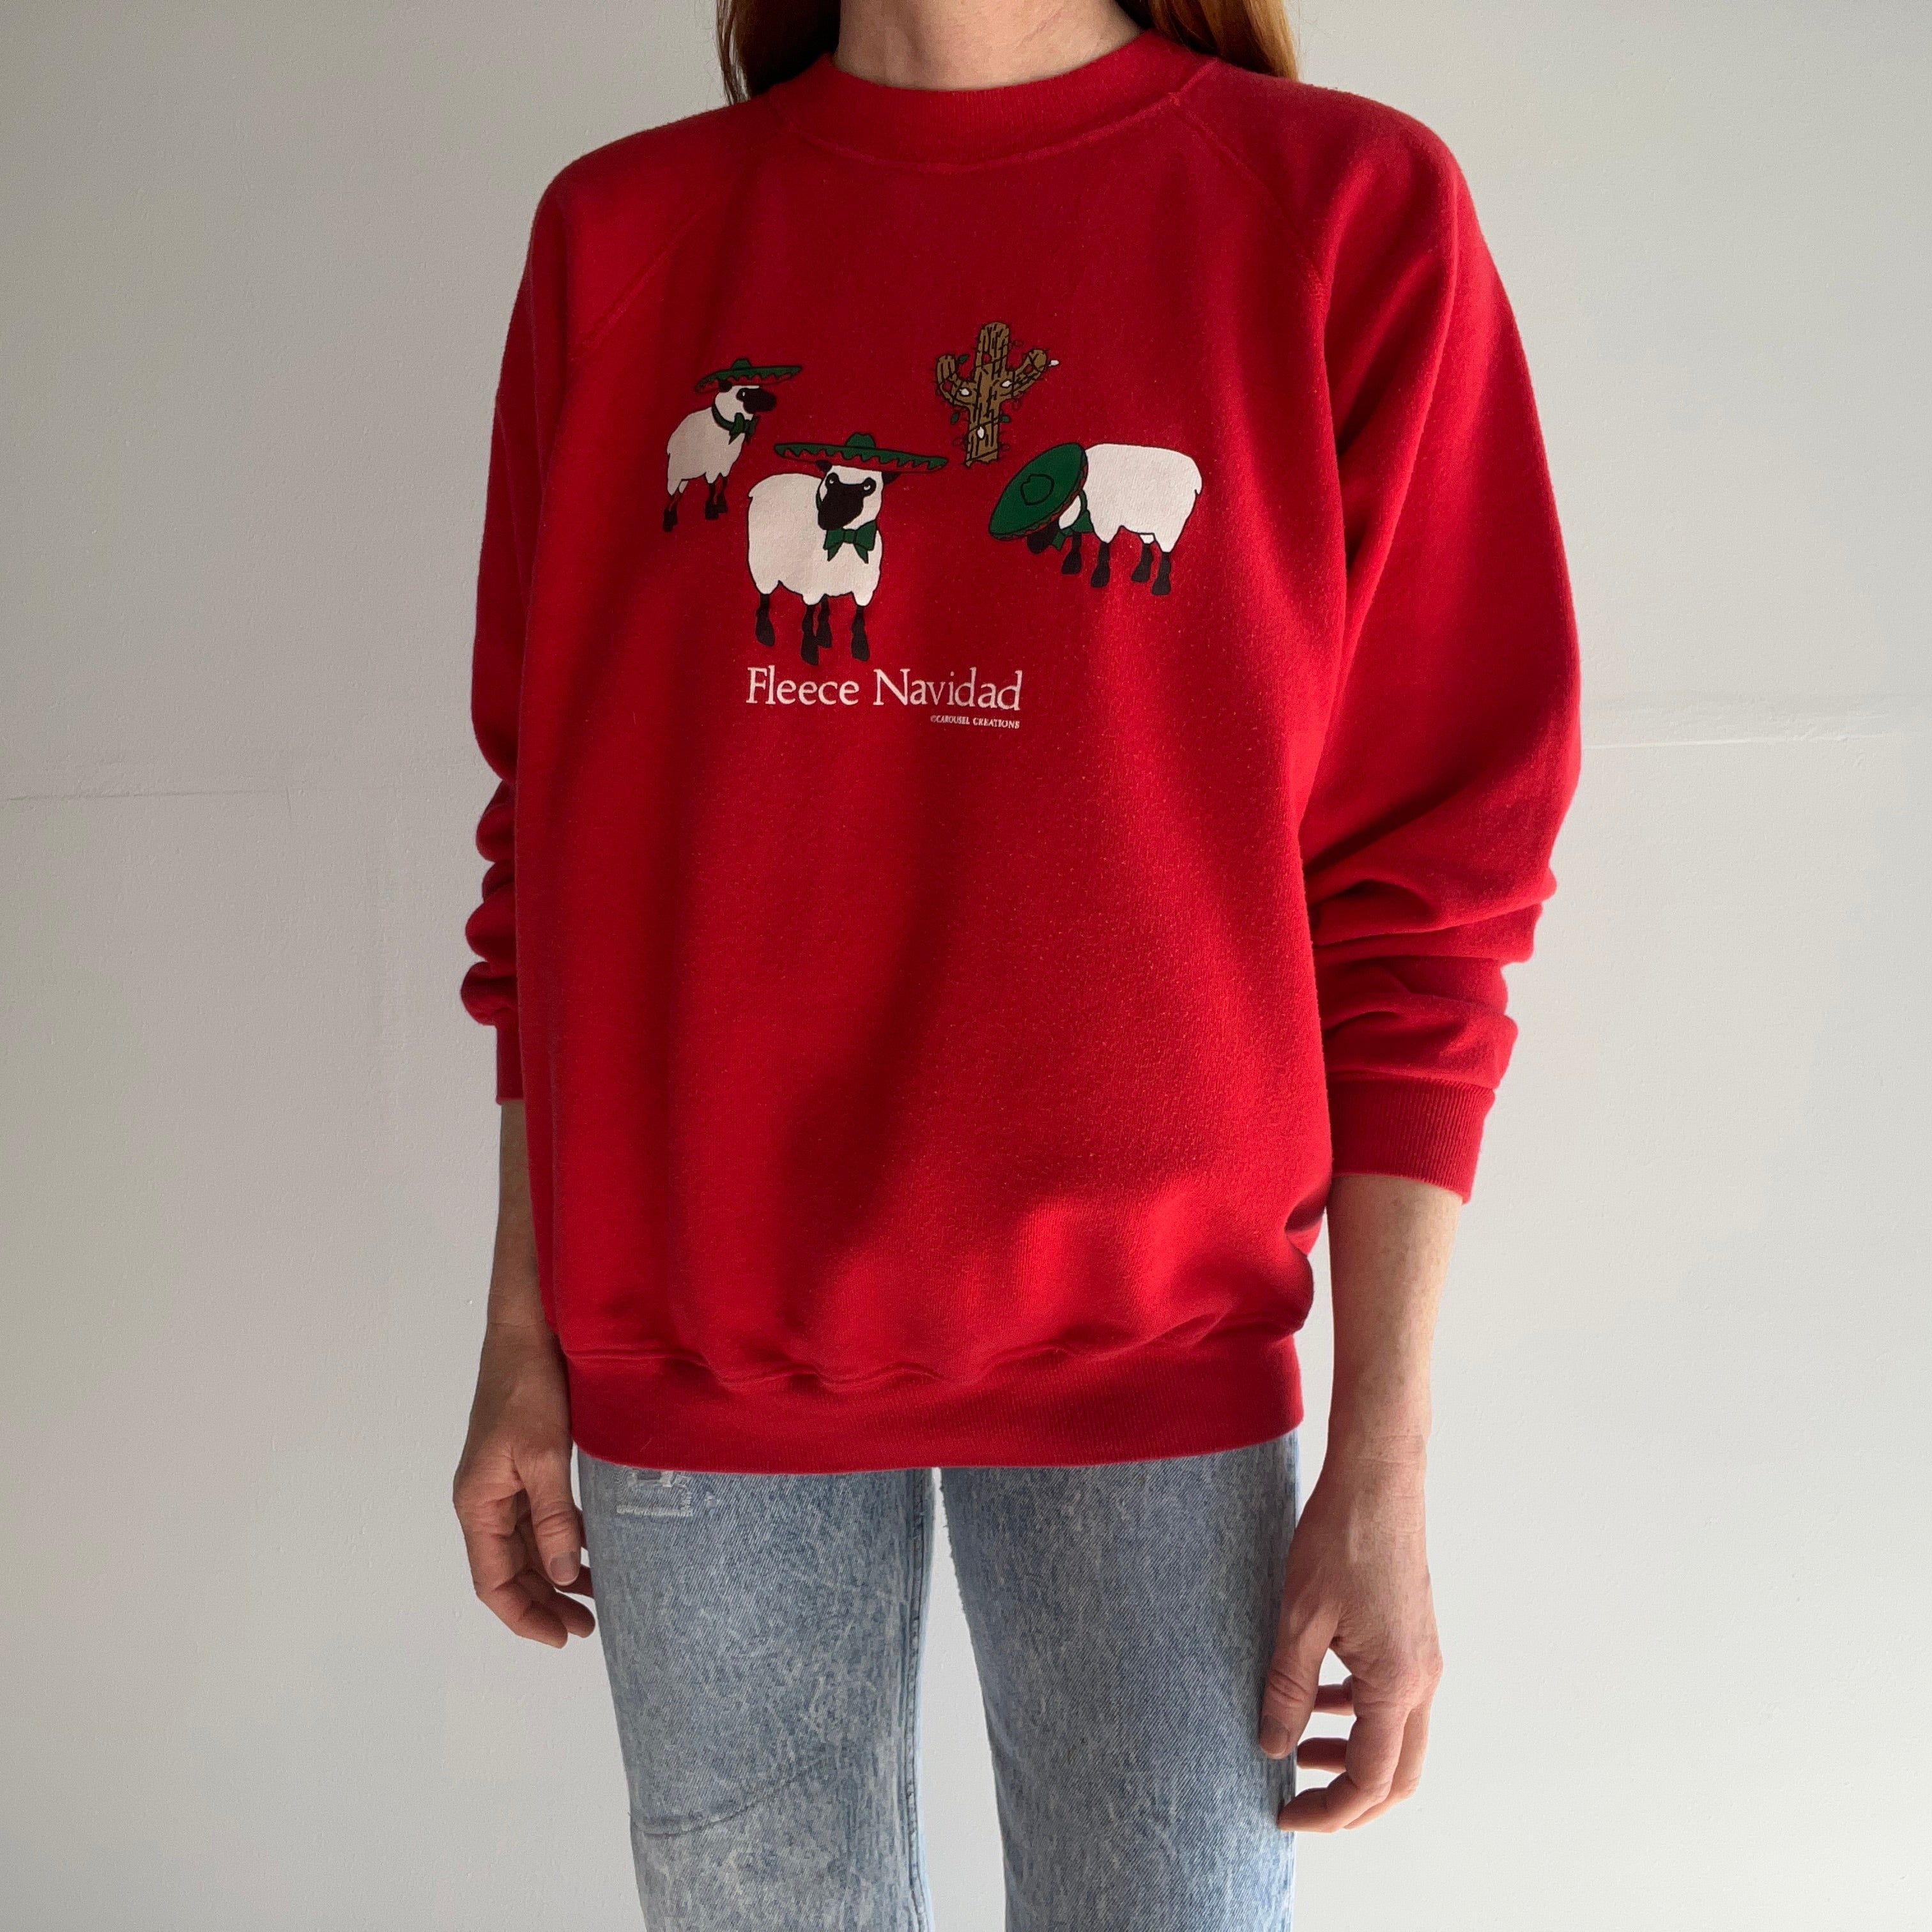 1980s Fleece Navidad Sweatshirt